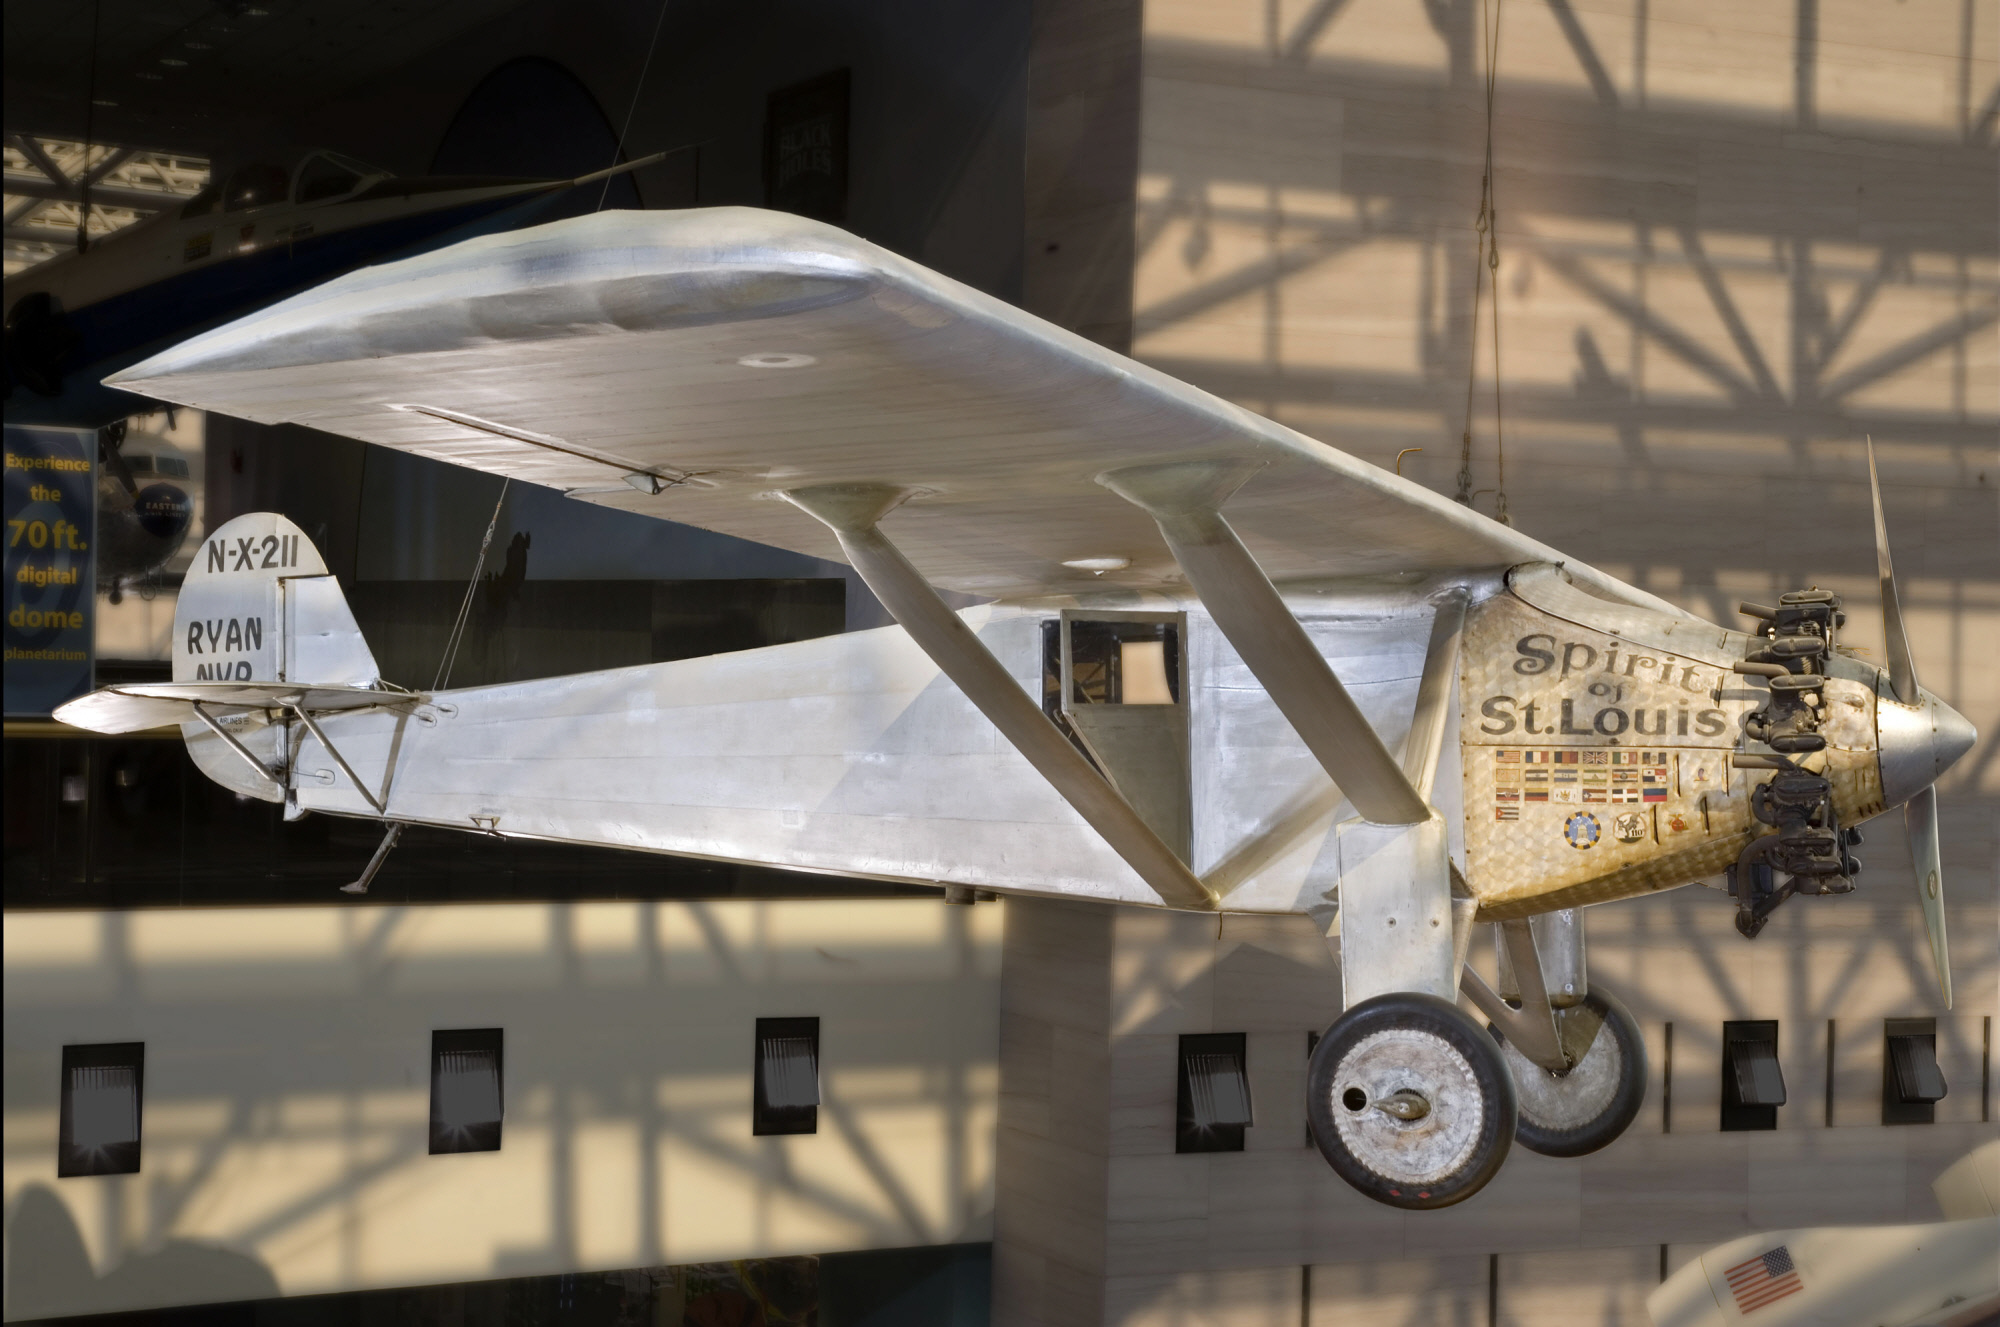 Charles A. Lindbergh's Ryan NYP, NX211, "Spirit of St. Louis" This